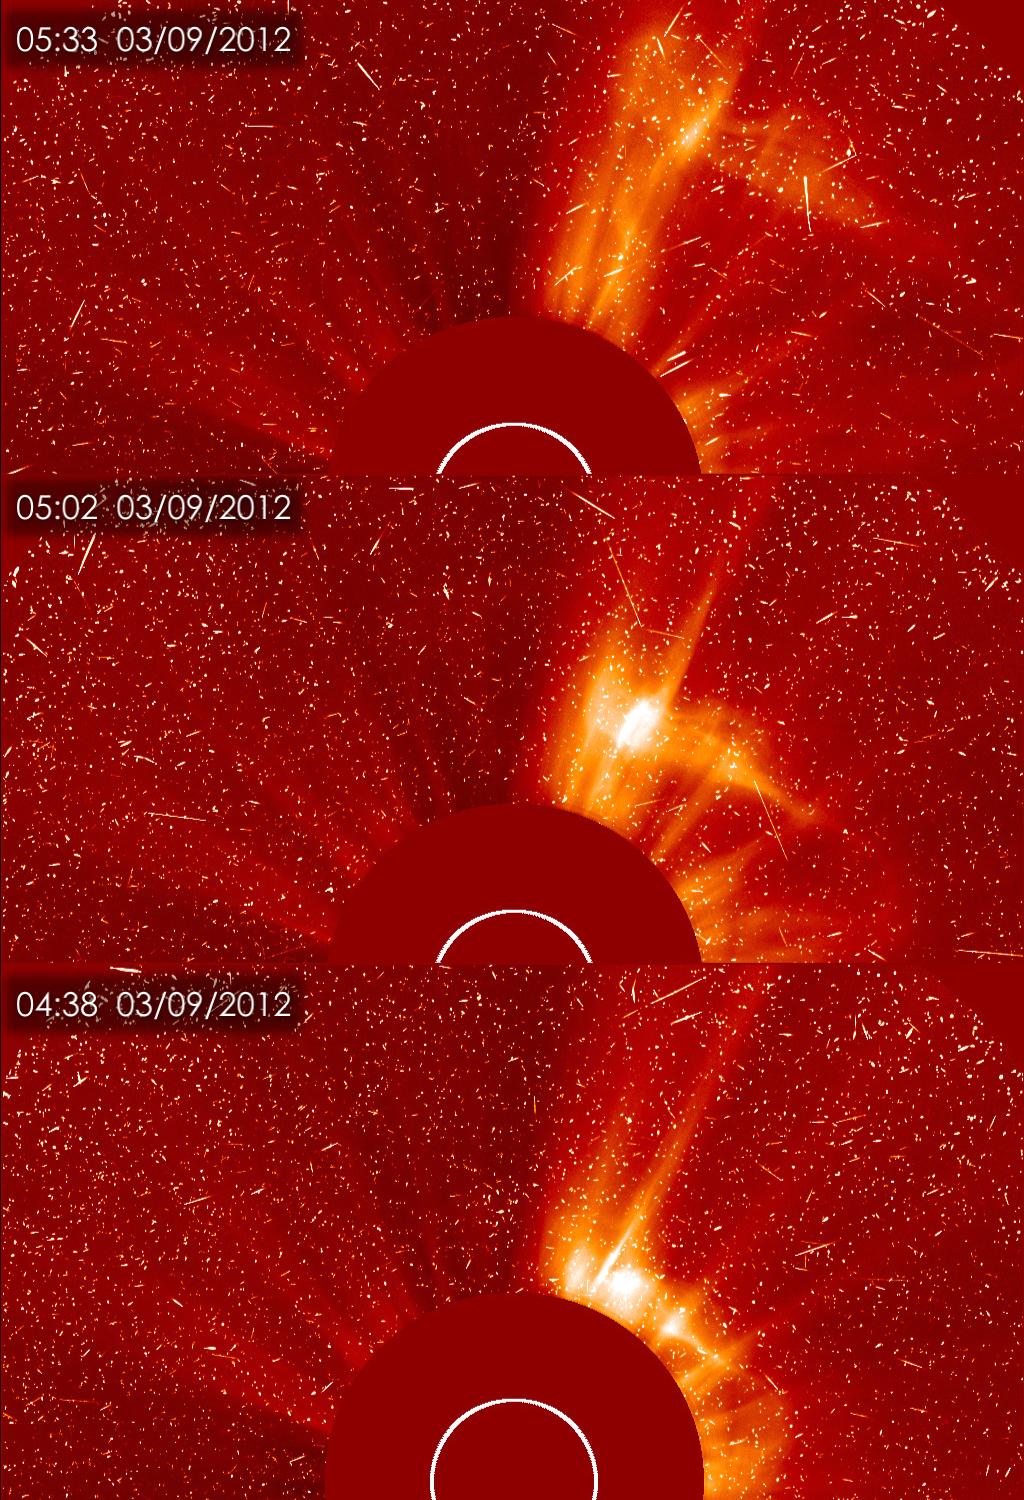 4 major solar flare + Halo CME/iCME towards earth +